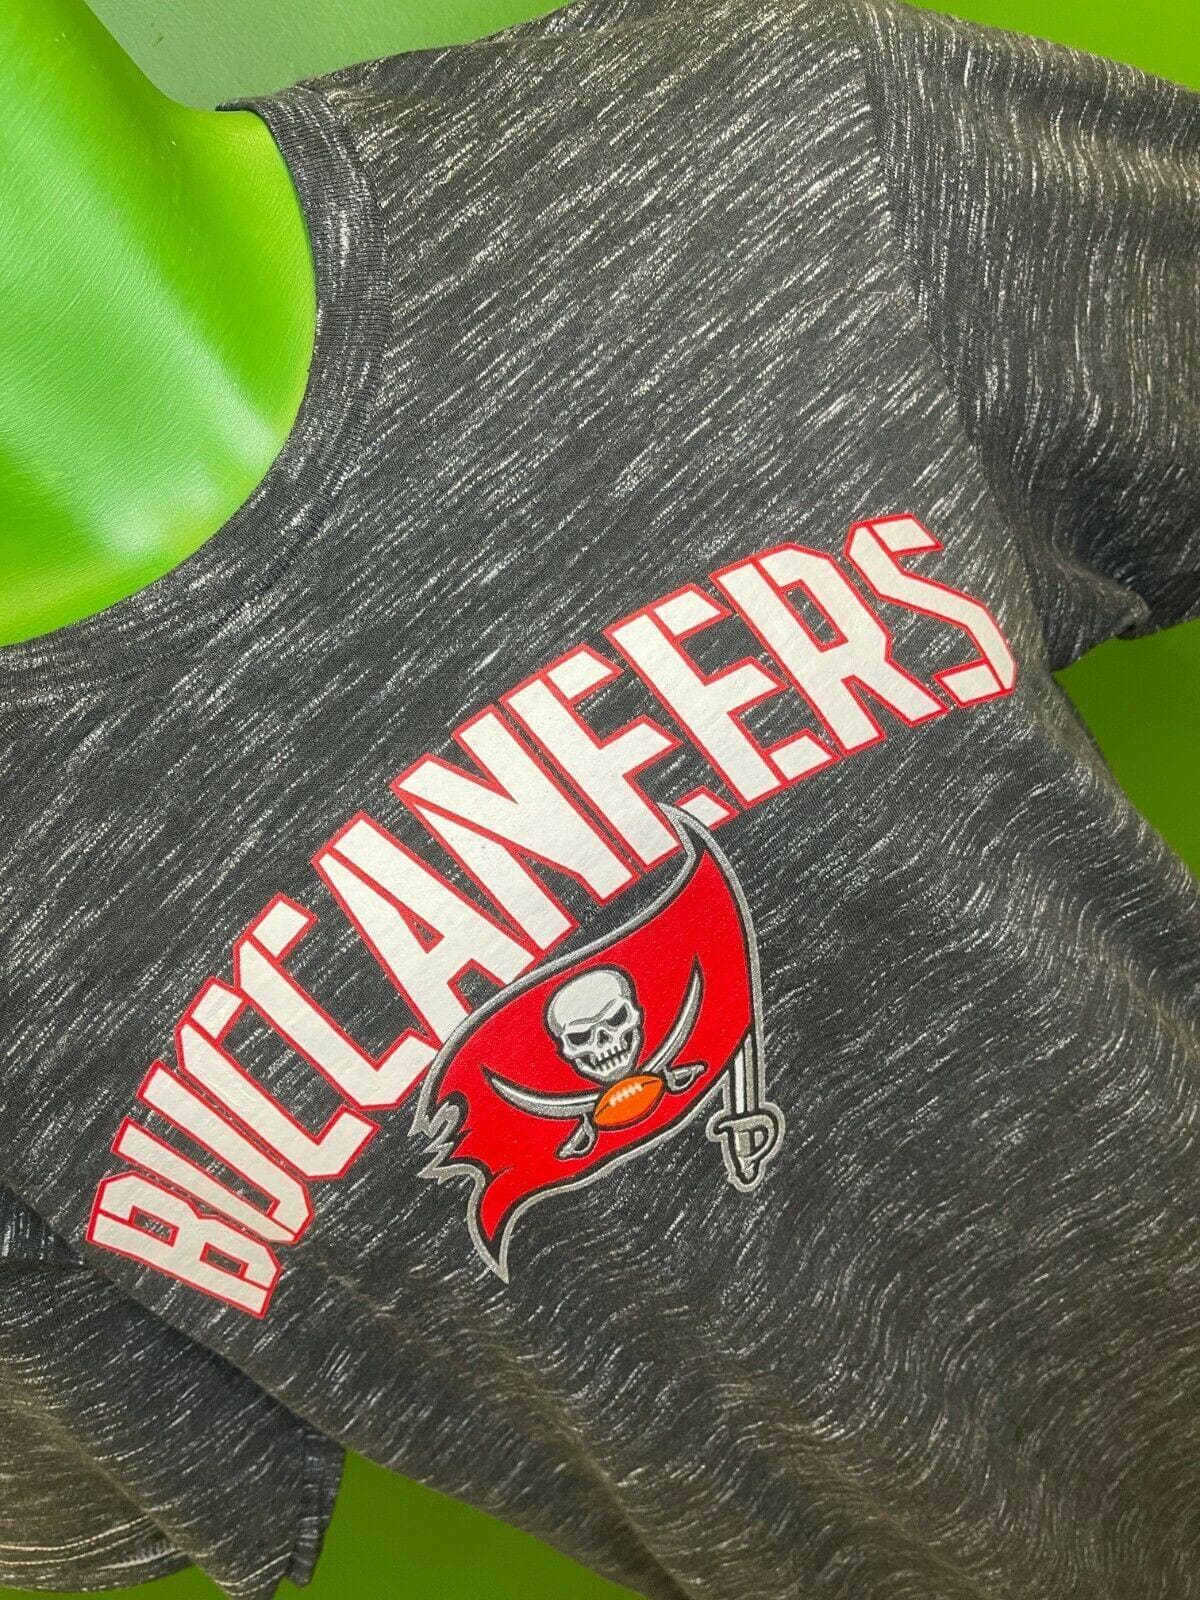 NFL Tampa Bay Buccaneers Fanatics T-Shirt Men's Small NWT